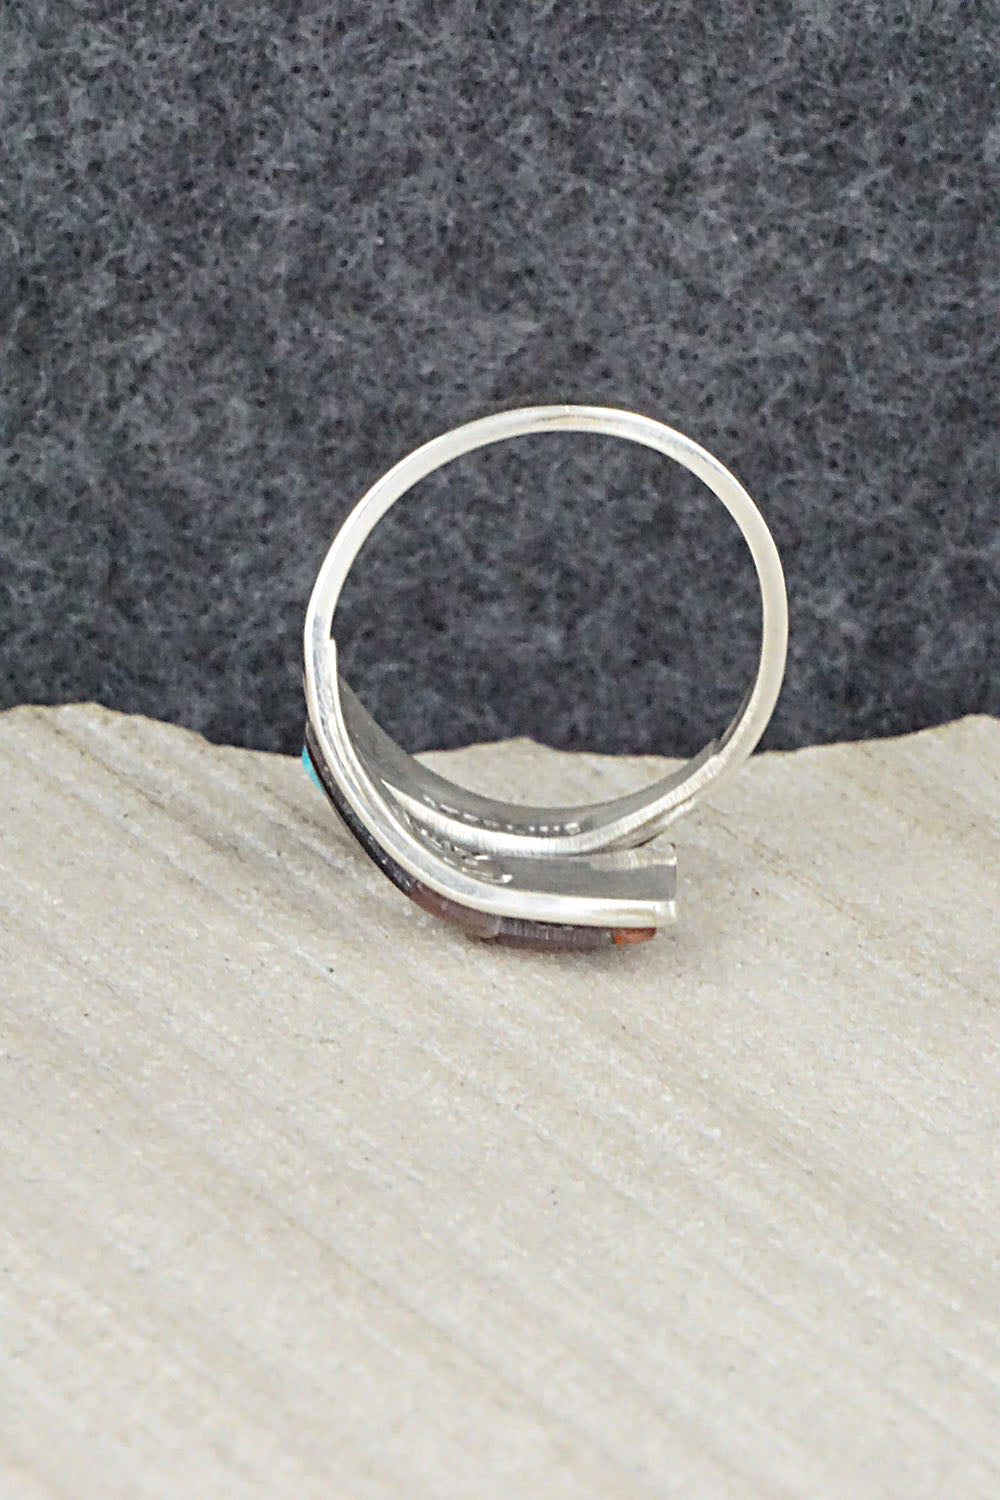 Multi Stone & Sterling Silver Ring - Mya Qualo - Size 7